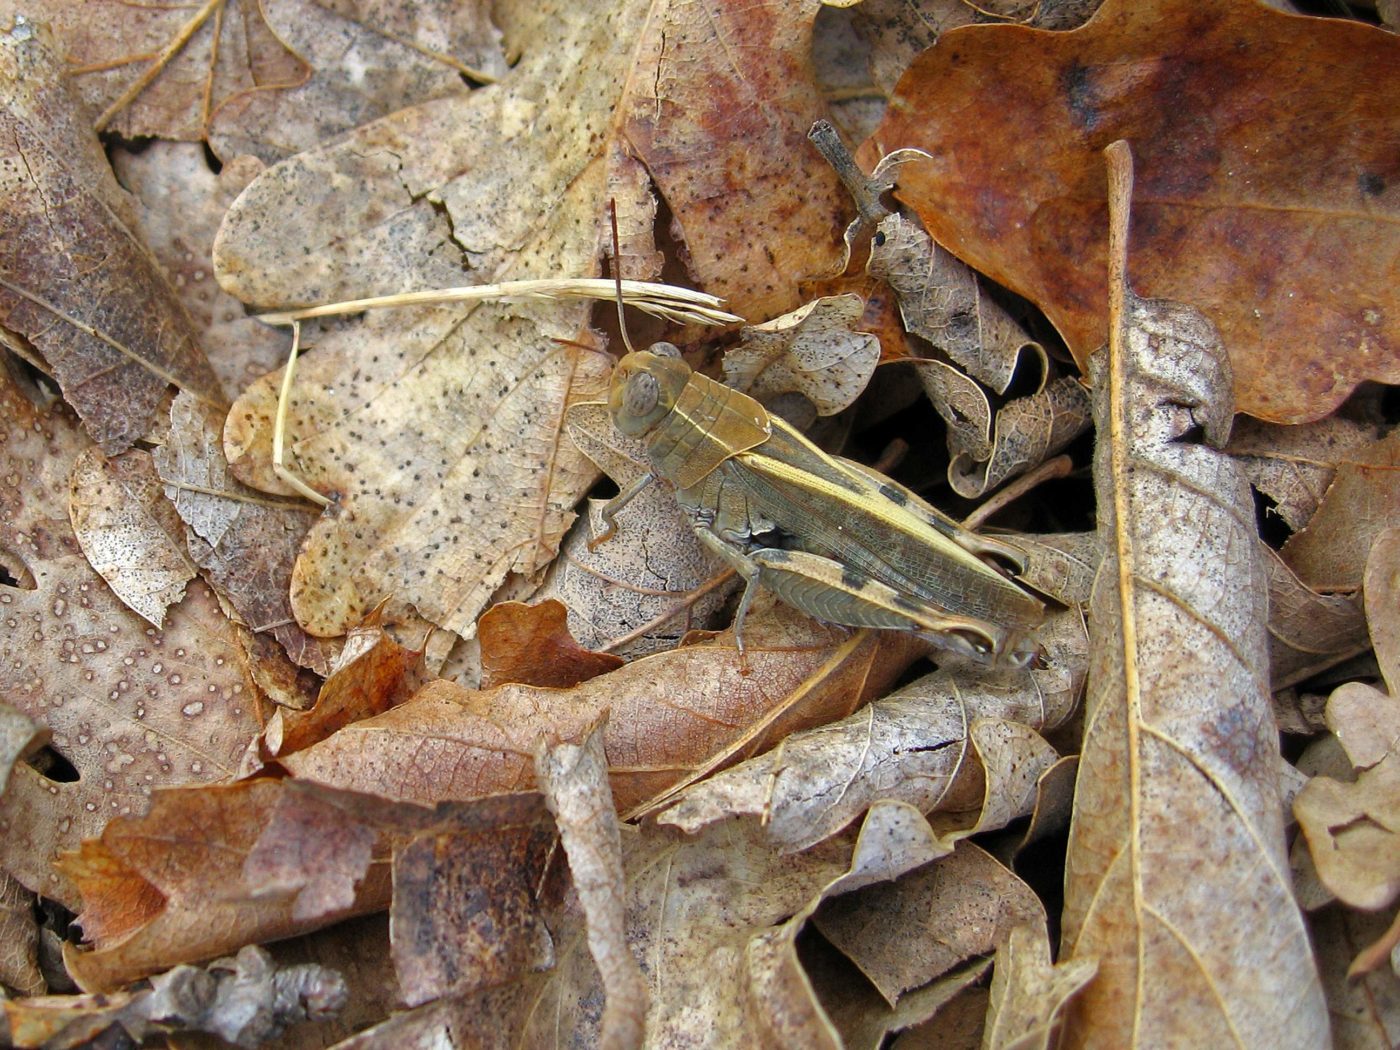 Grasshopper Camouflaged on Dead Leaves in Croatia